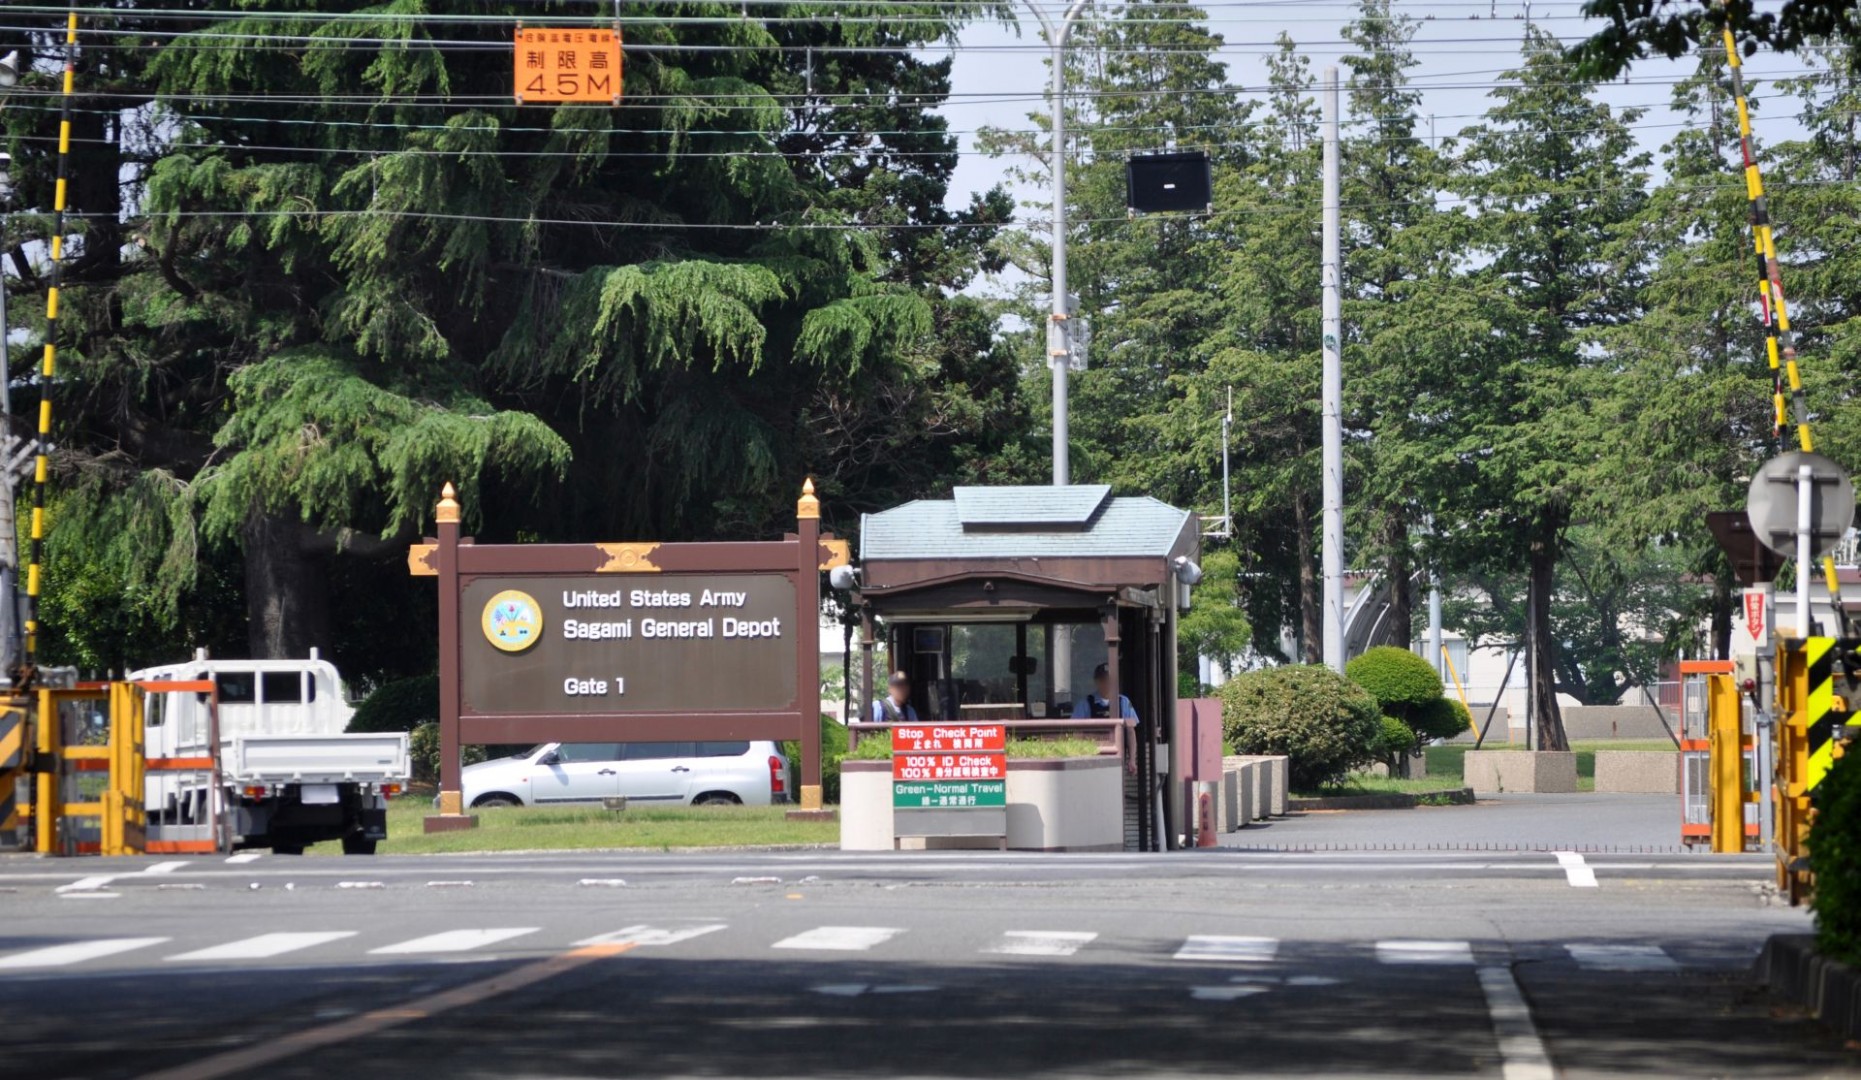 US Army Sagami General Depot